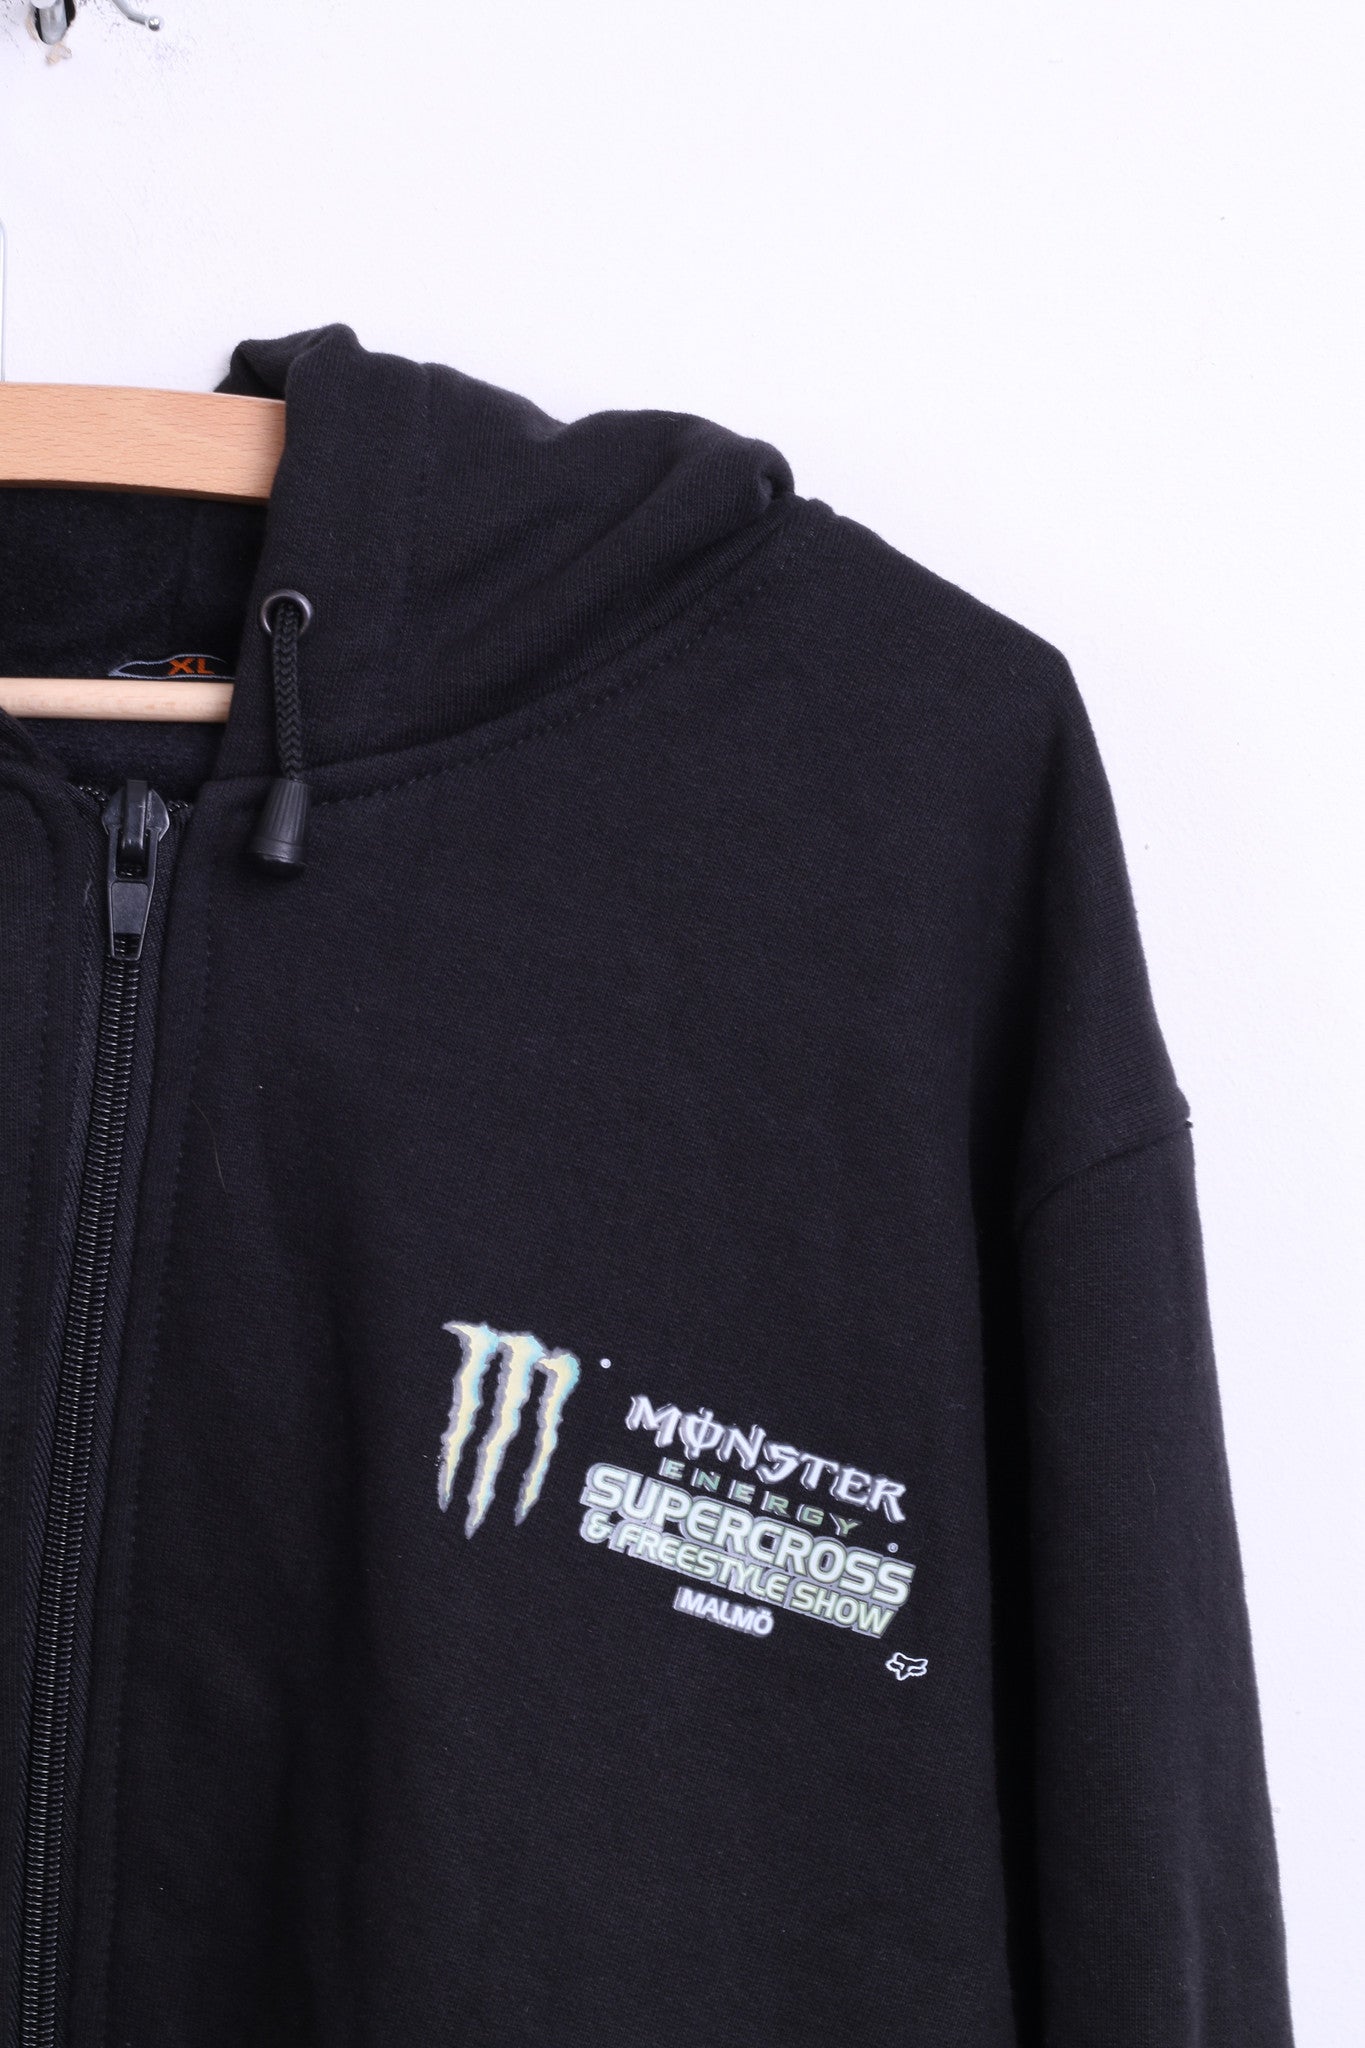 Moto Event Mens XL Sweatshirt Black Hood Cotton Monster Supercross - RetrospectClothes